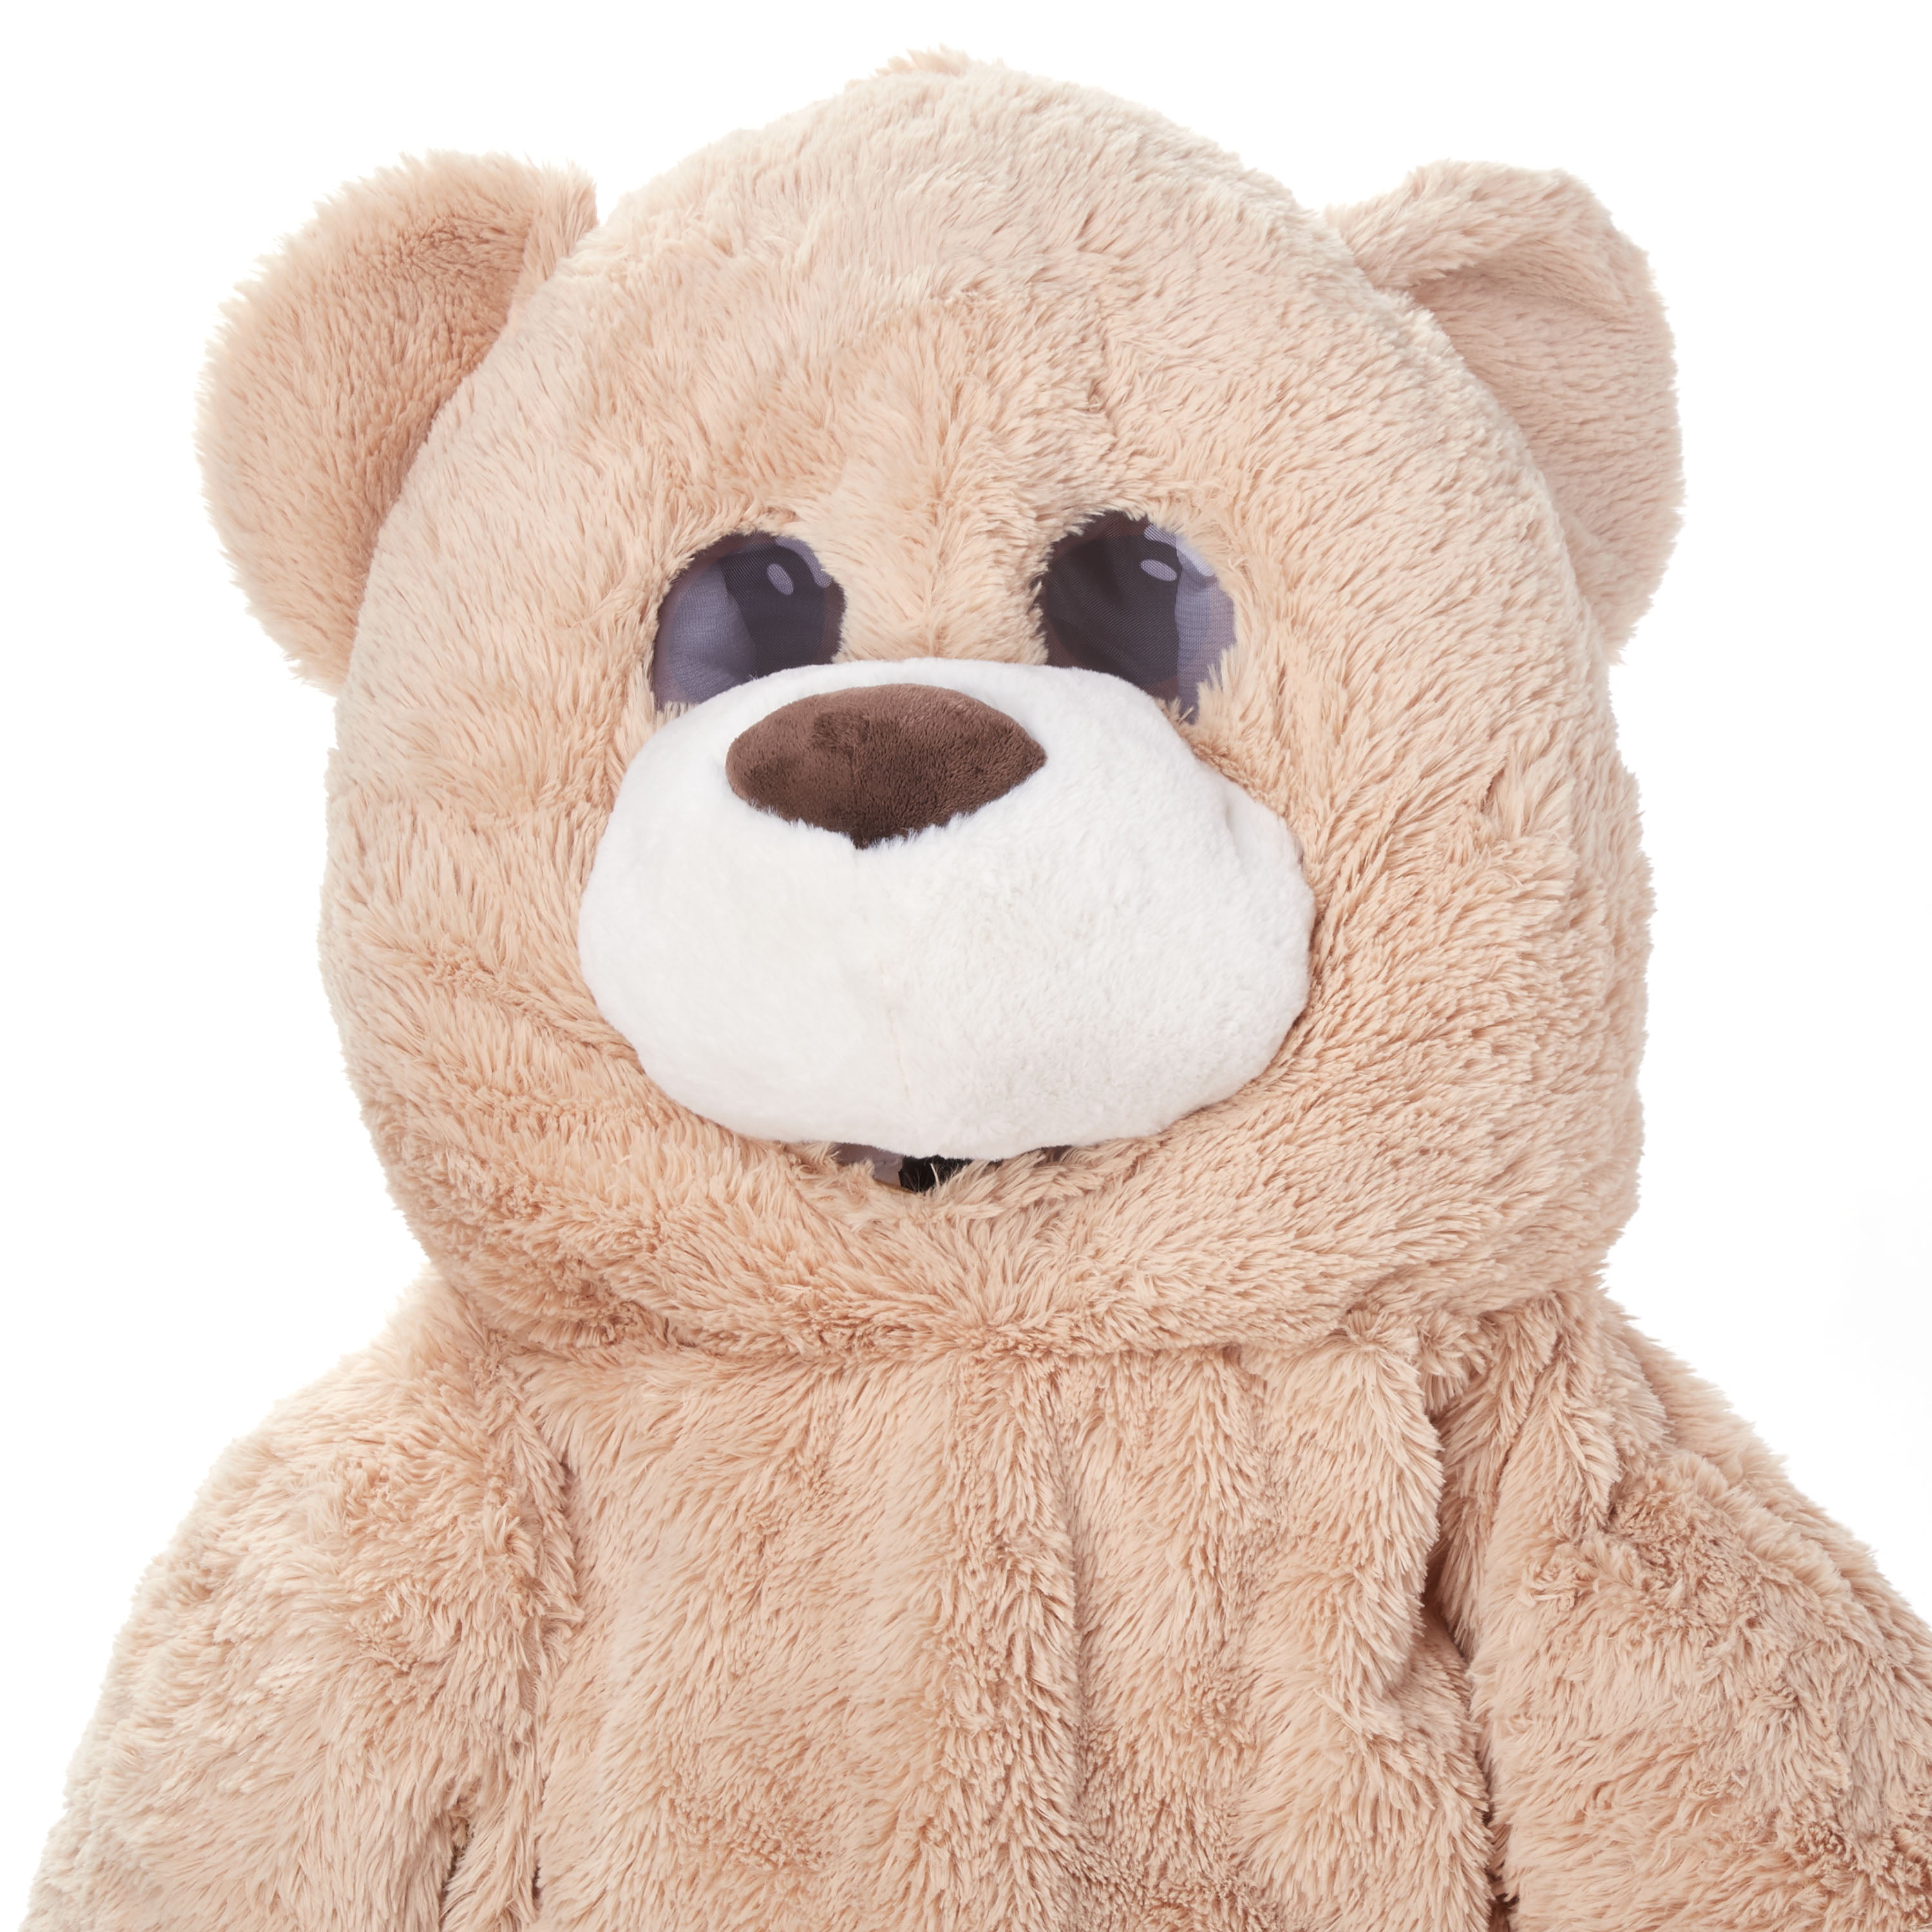 fluffy bear suit